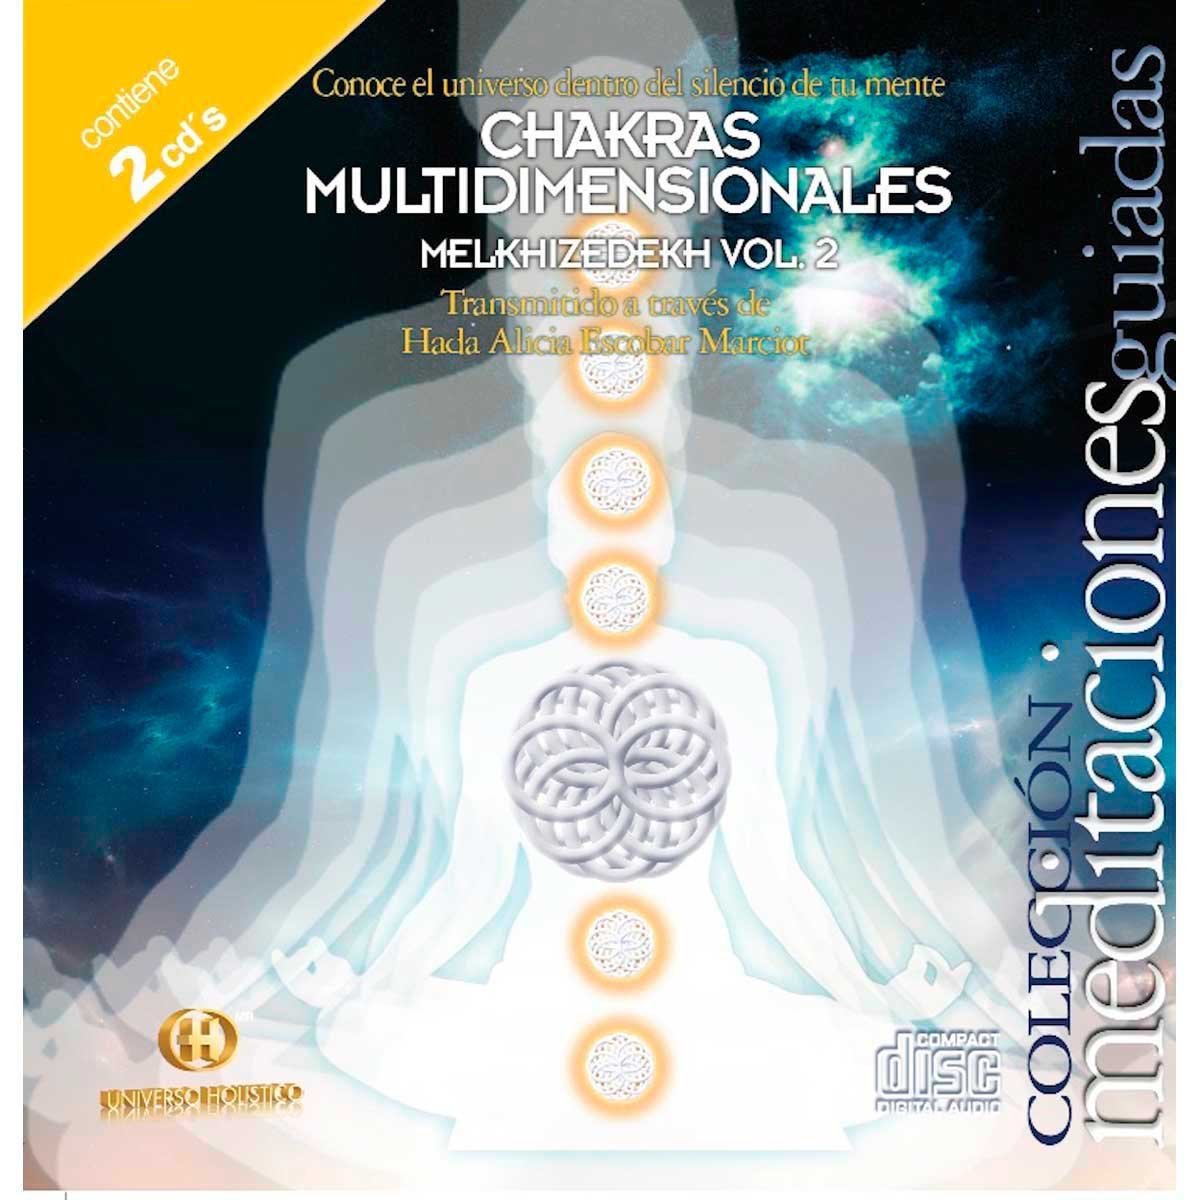 2 Cds Chakras Multidimensionales Melkhizedekh Vol.2